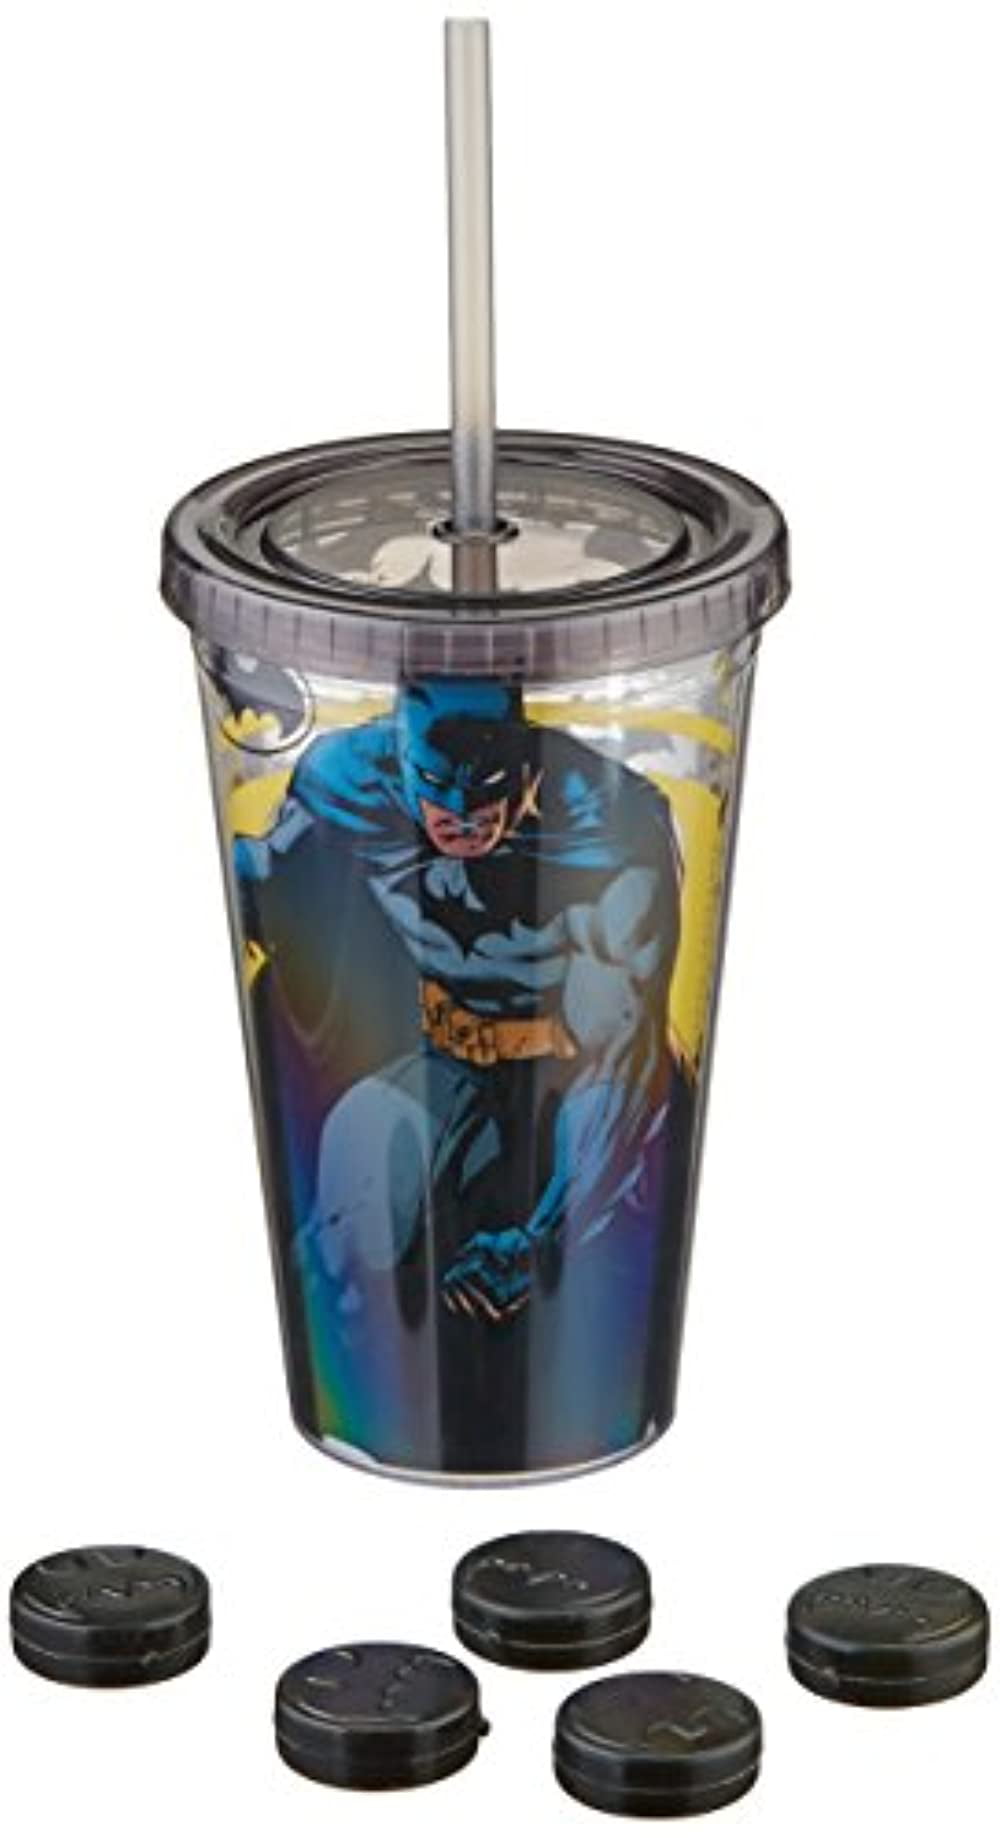 Hallmark DC Comics Batman Stainless Steel Water Bottle, 16 oz